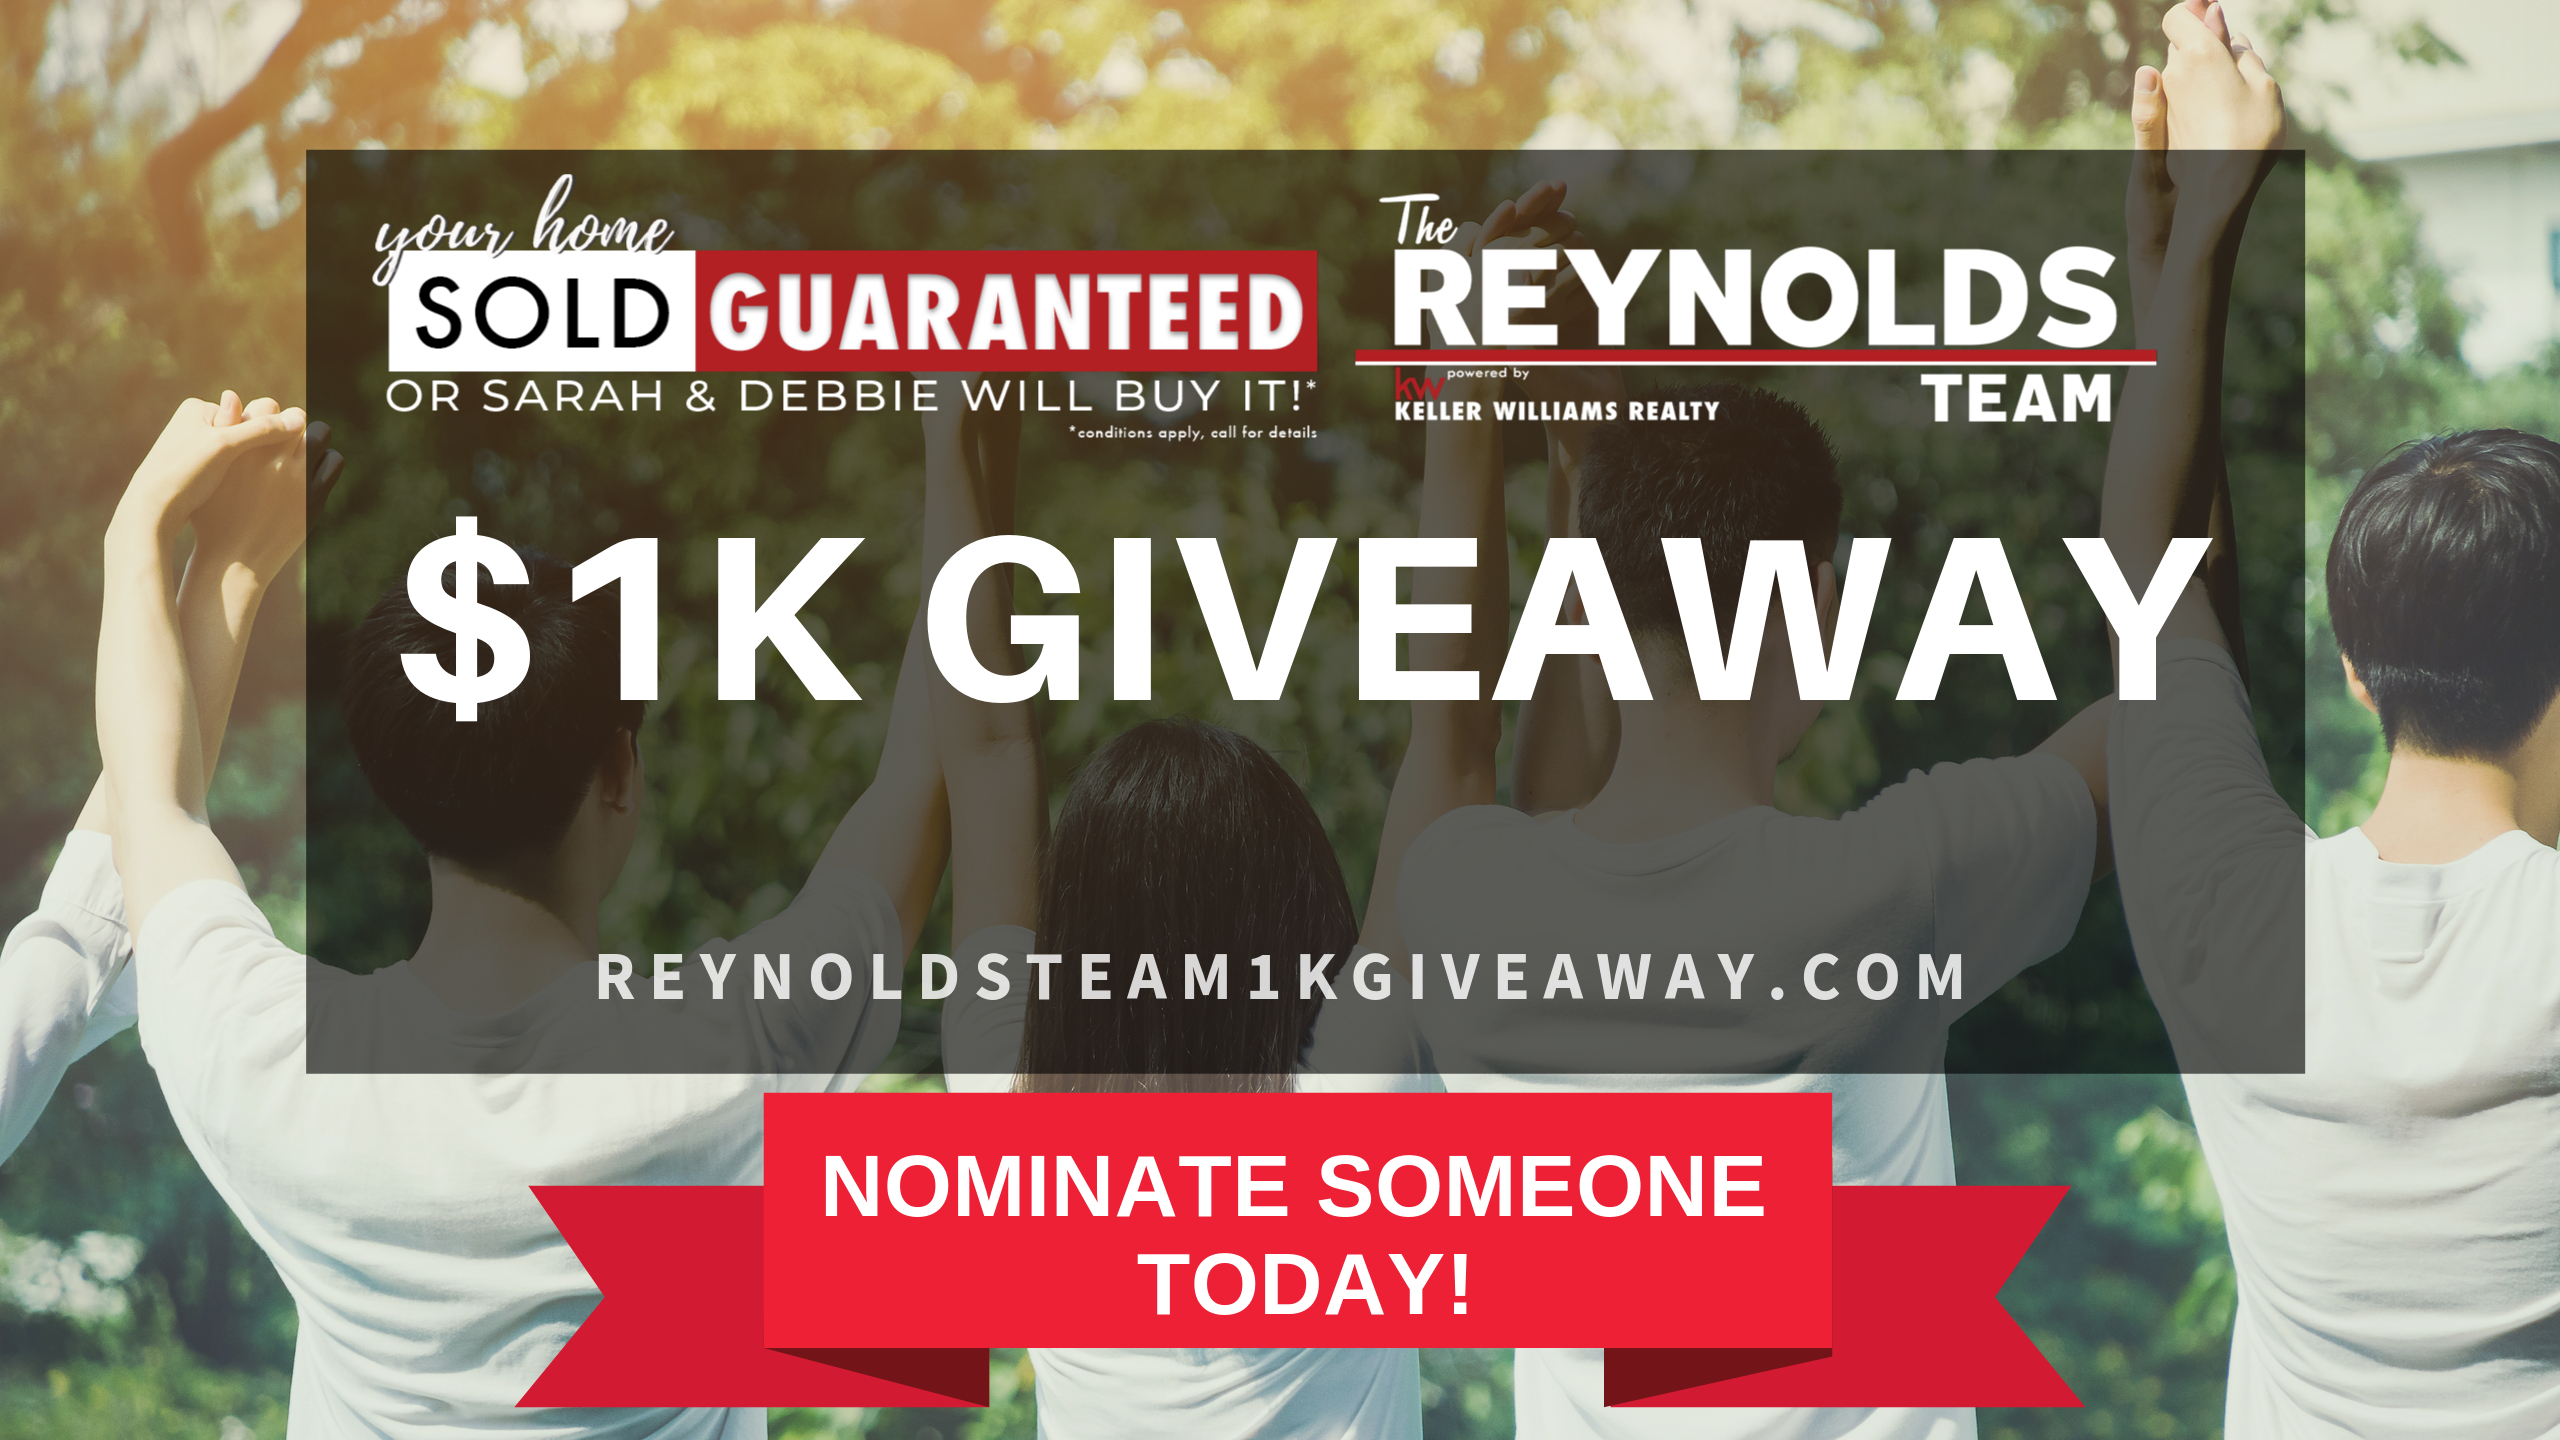 Nominate Someone for The Reynolds Team’s October $1K Giveaway